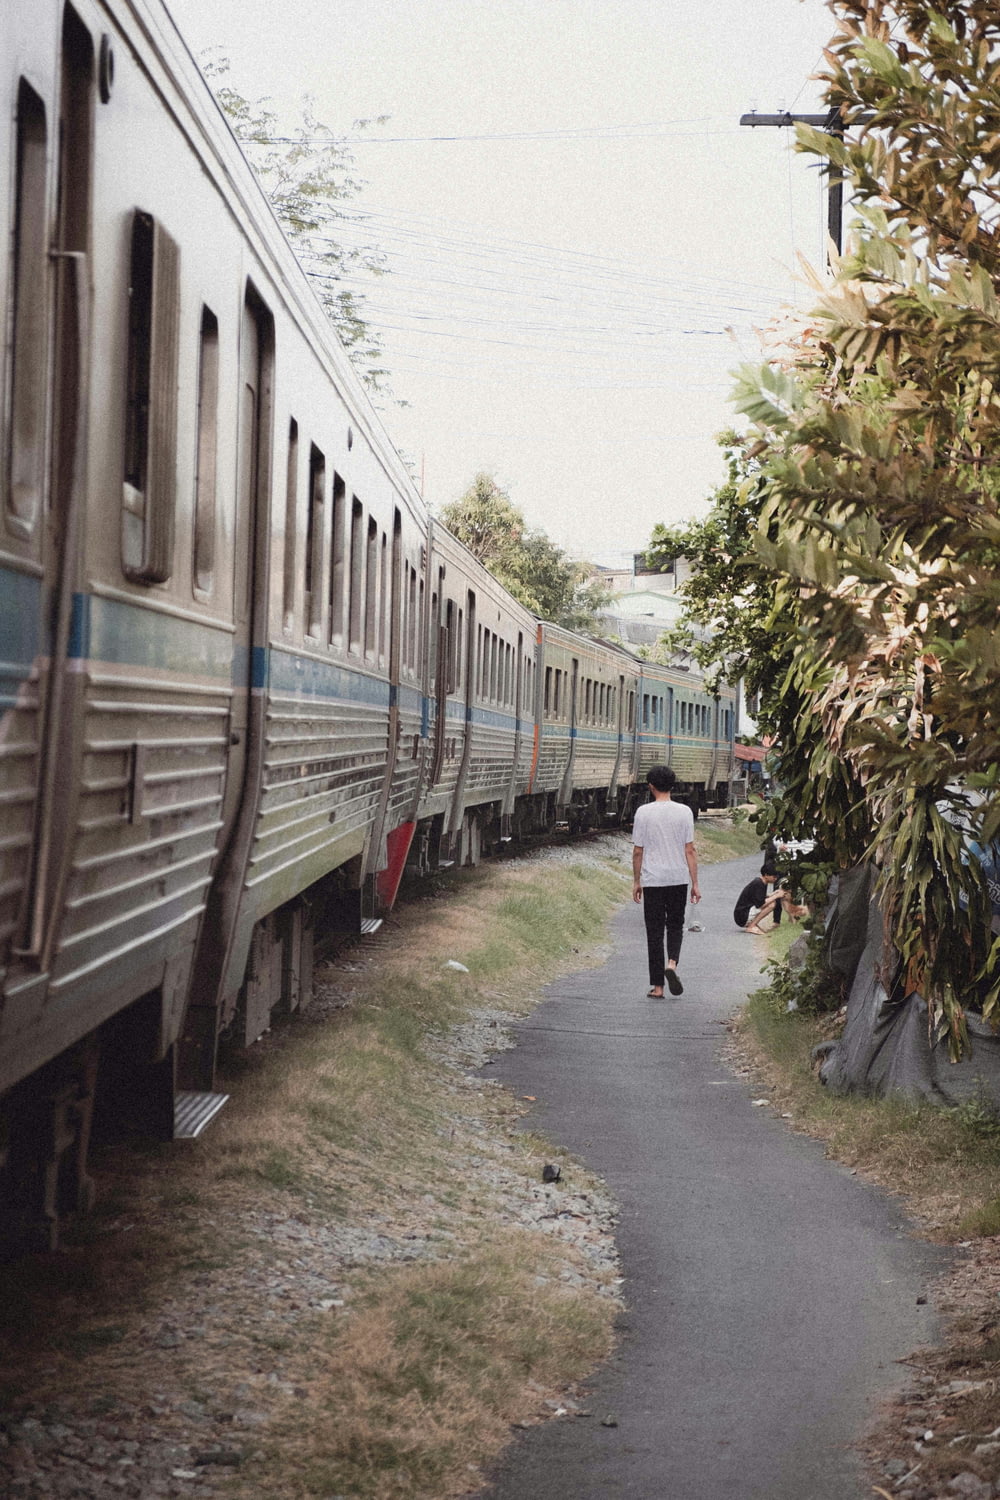 a person walking down a path next to a train